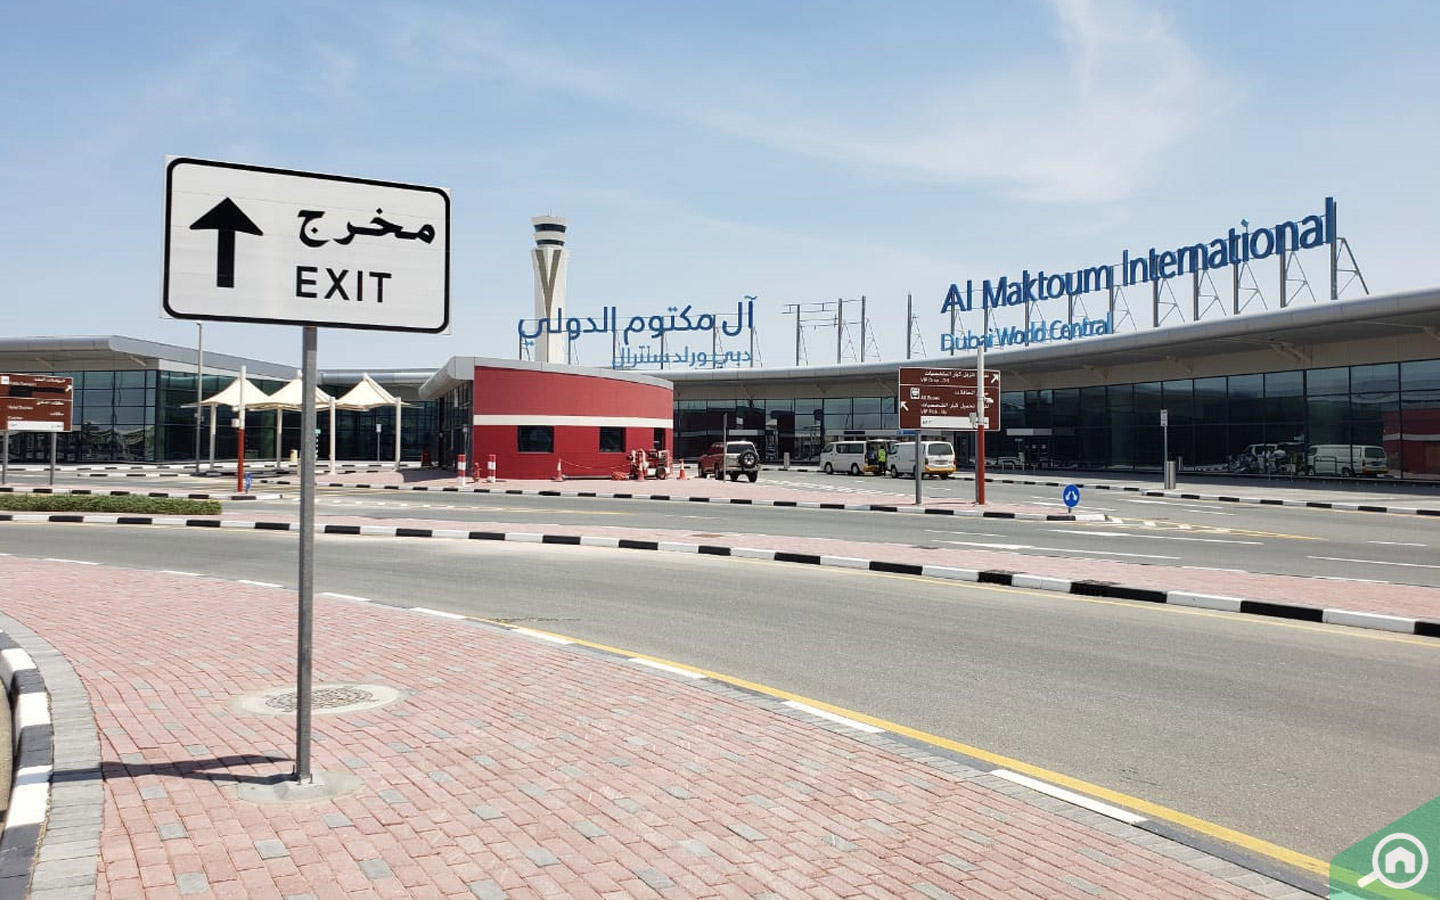 Dubai-South-Al-Maktoum-International-Airport-1-20200618.jpg